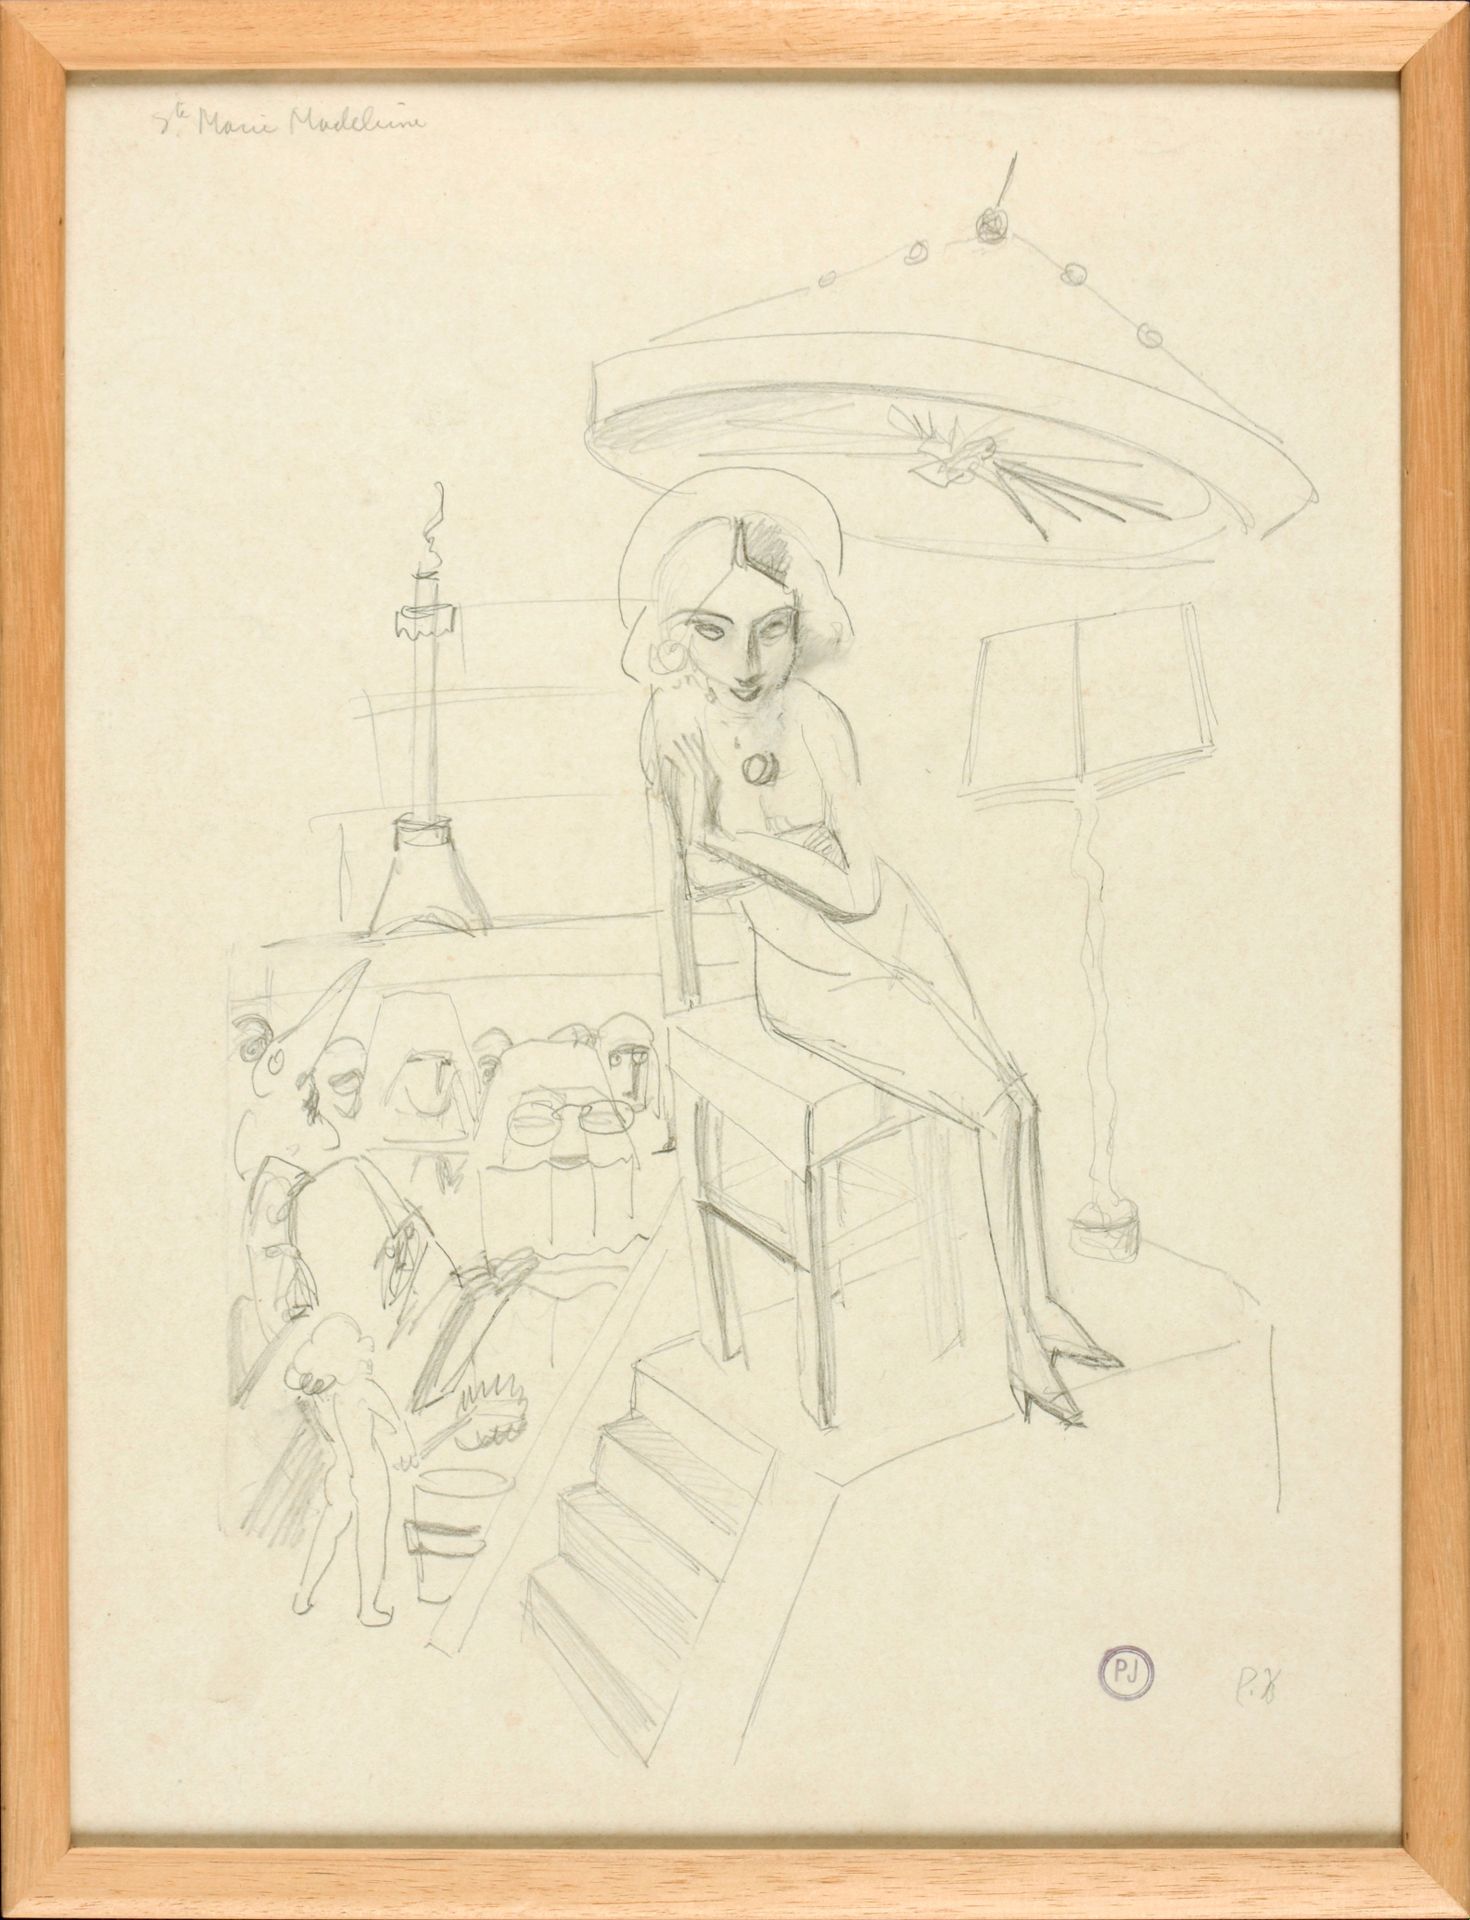 JOOSTENS, Paul (1889-1960) St. Mary Magdalene

Tekening (36 x 27 cm), getekend r&hellip;